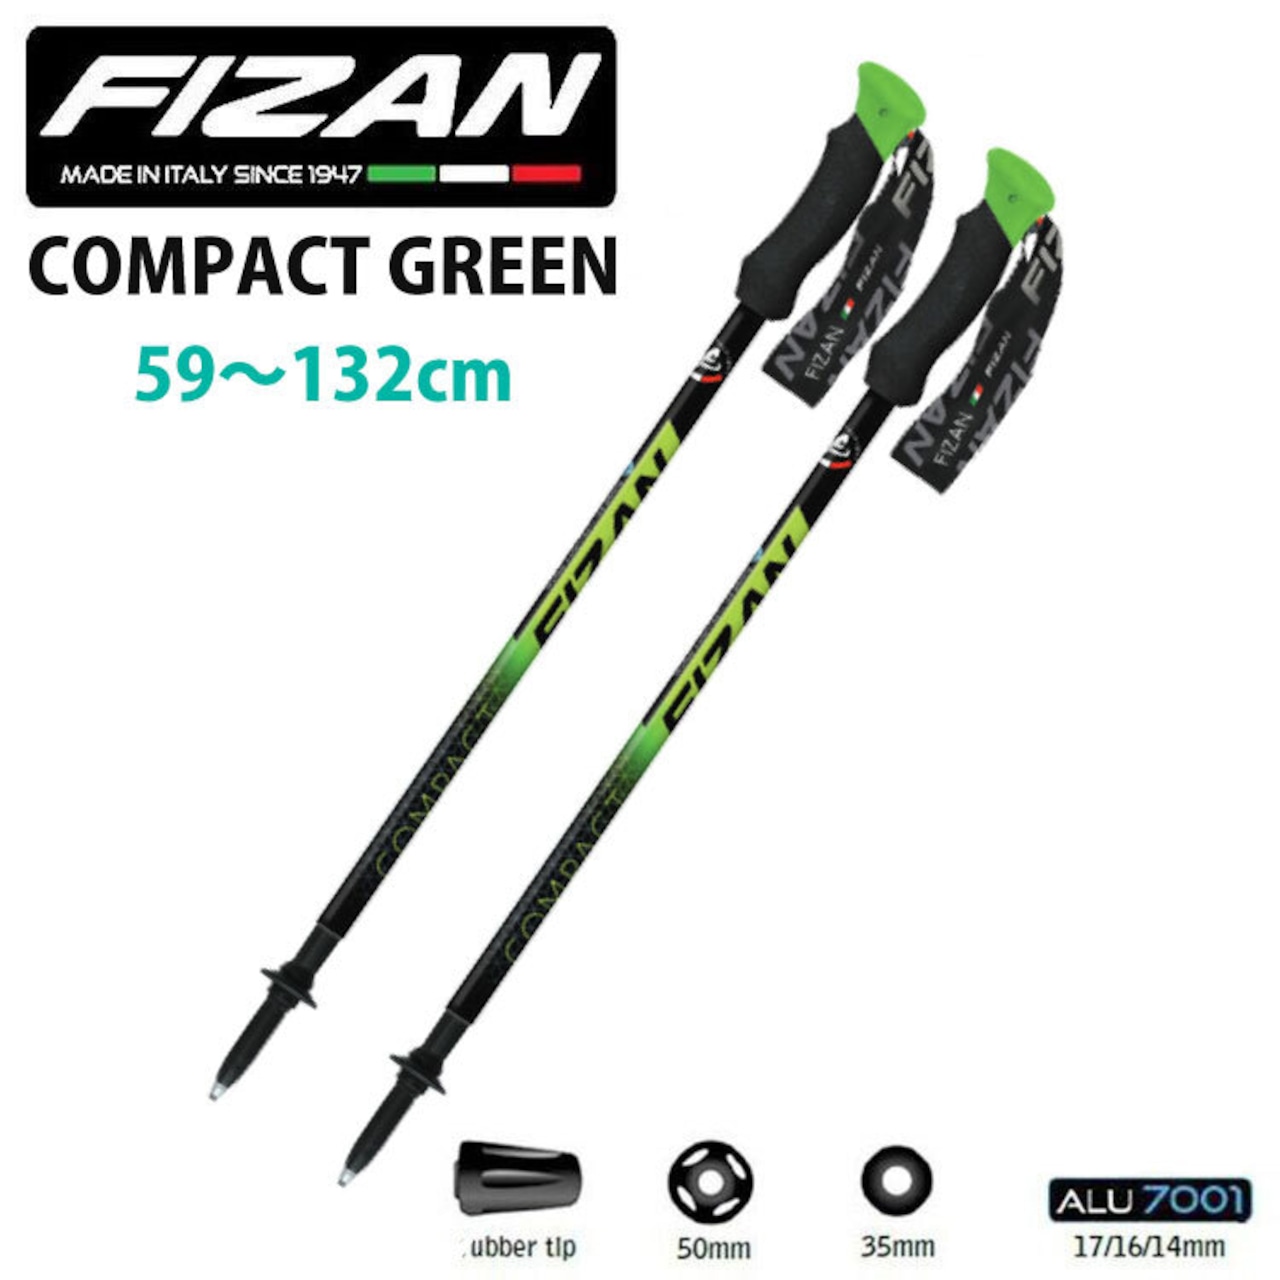 FIZAN フィザン 世界最軽量 可変3段 トレッキングポール59-132cm COMPACT GREEN コンパクトグリーン